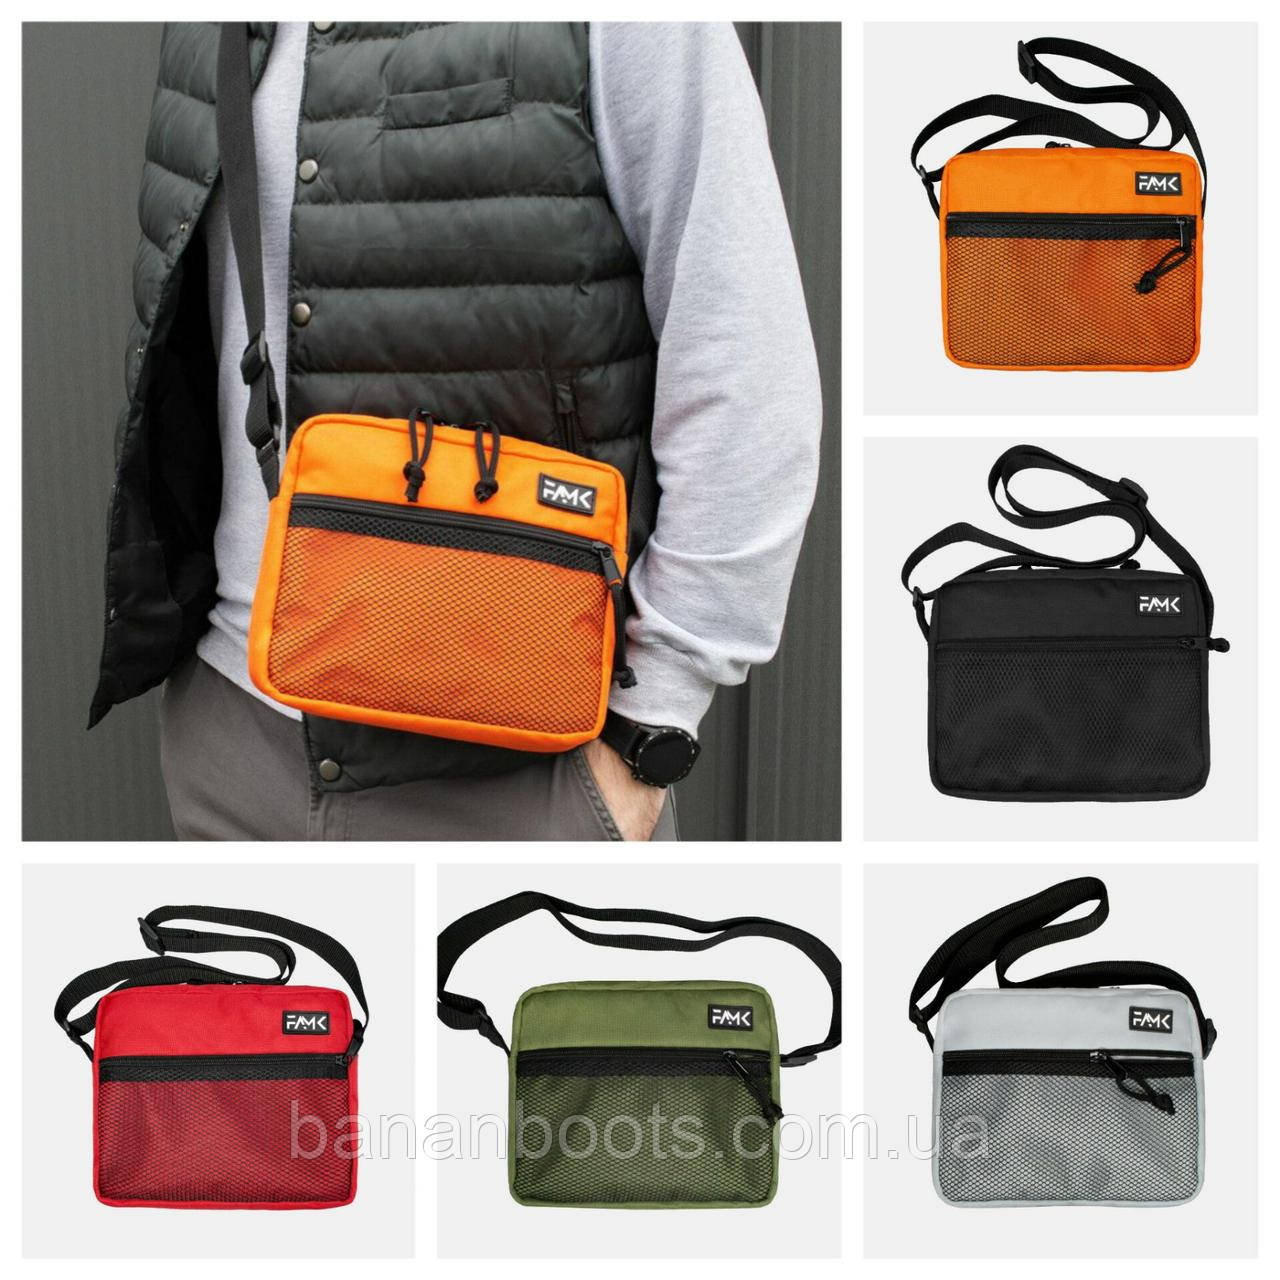 Компактна молодіжна сумка через плече, месенджер для телефону, гаманця, планшета